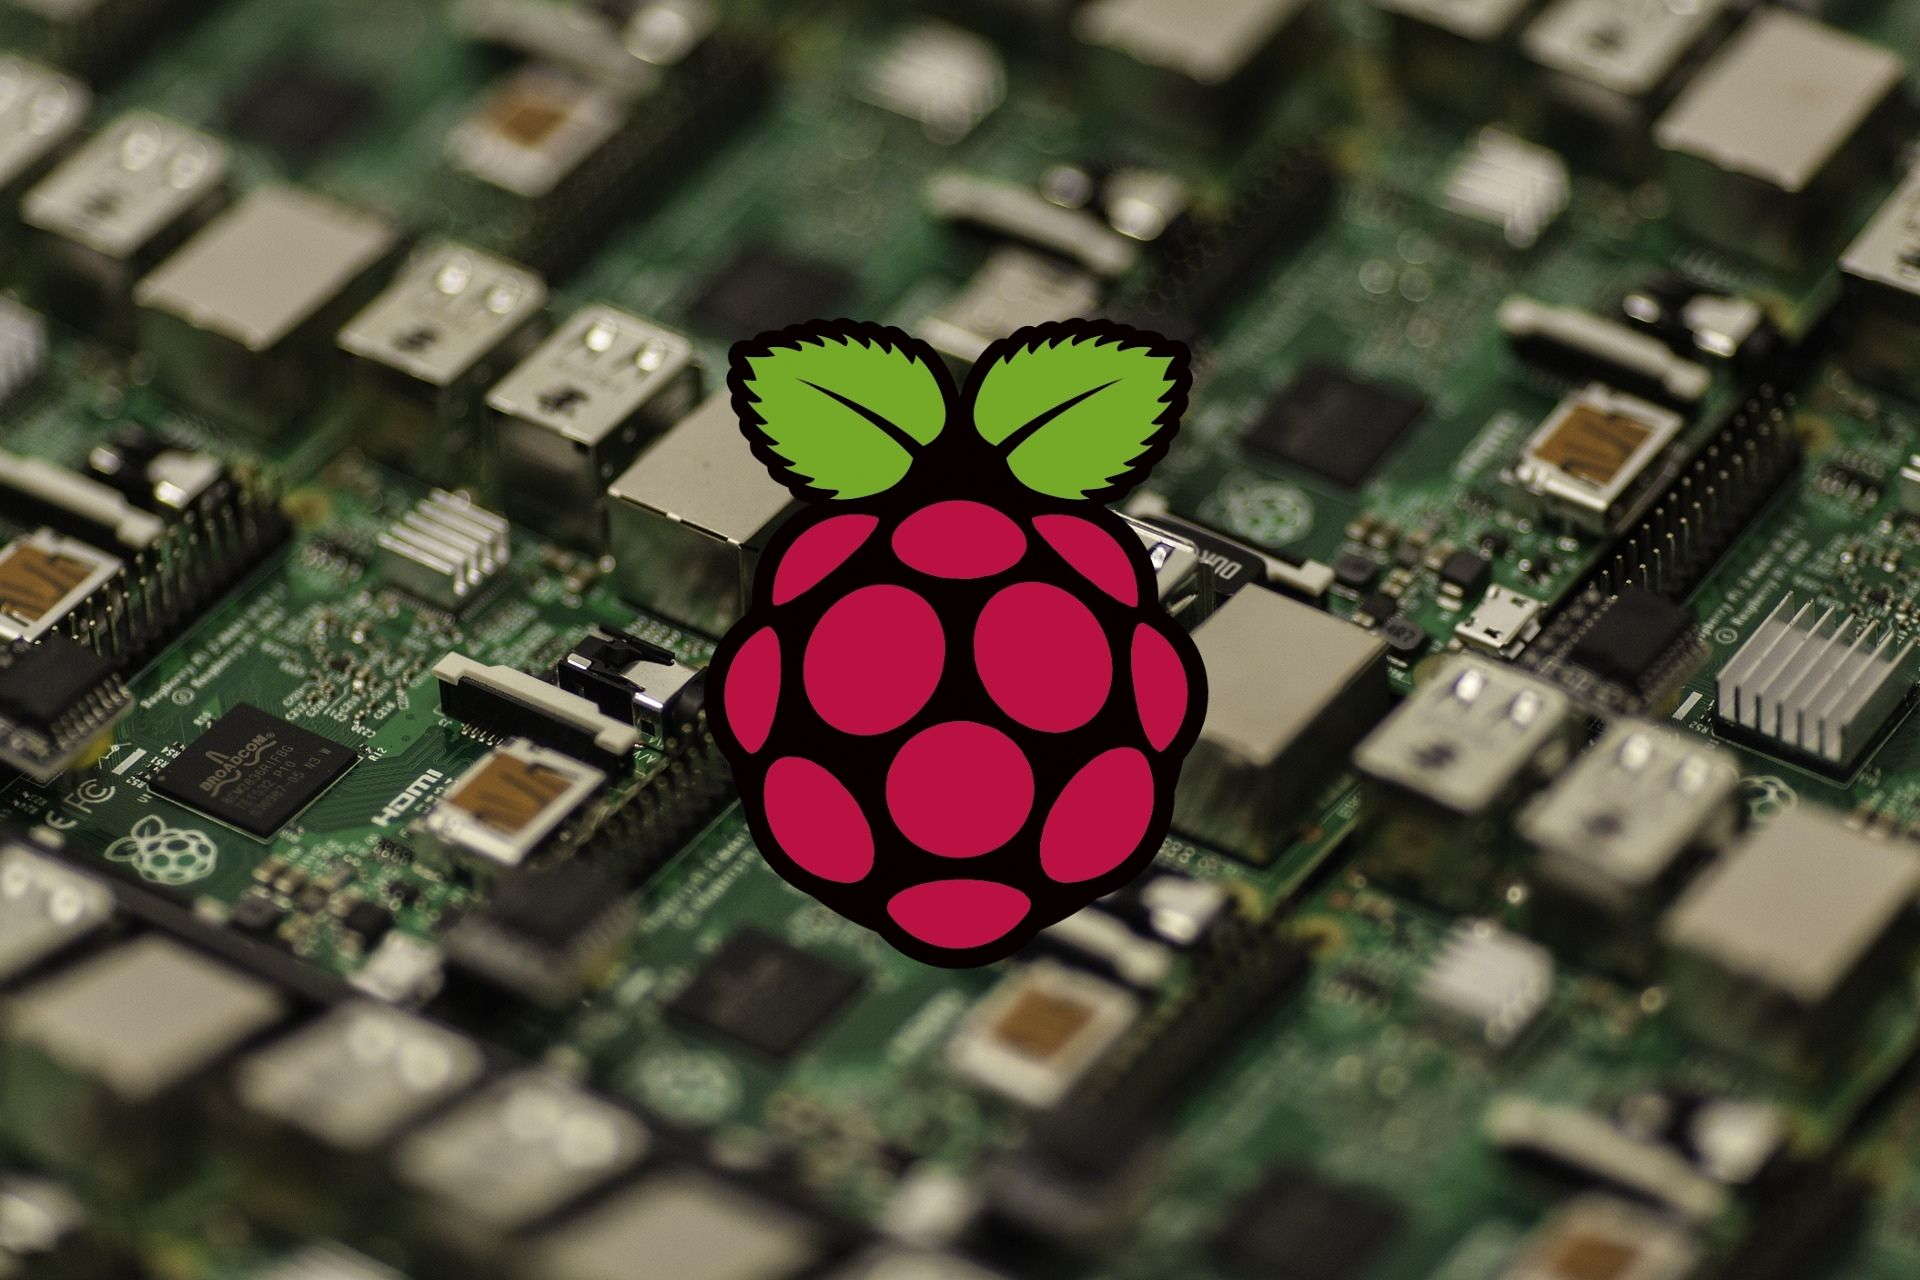 How to install Raspbian on Raspberry Pi